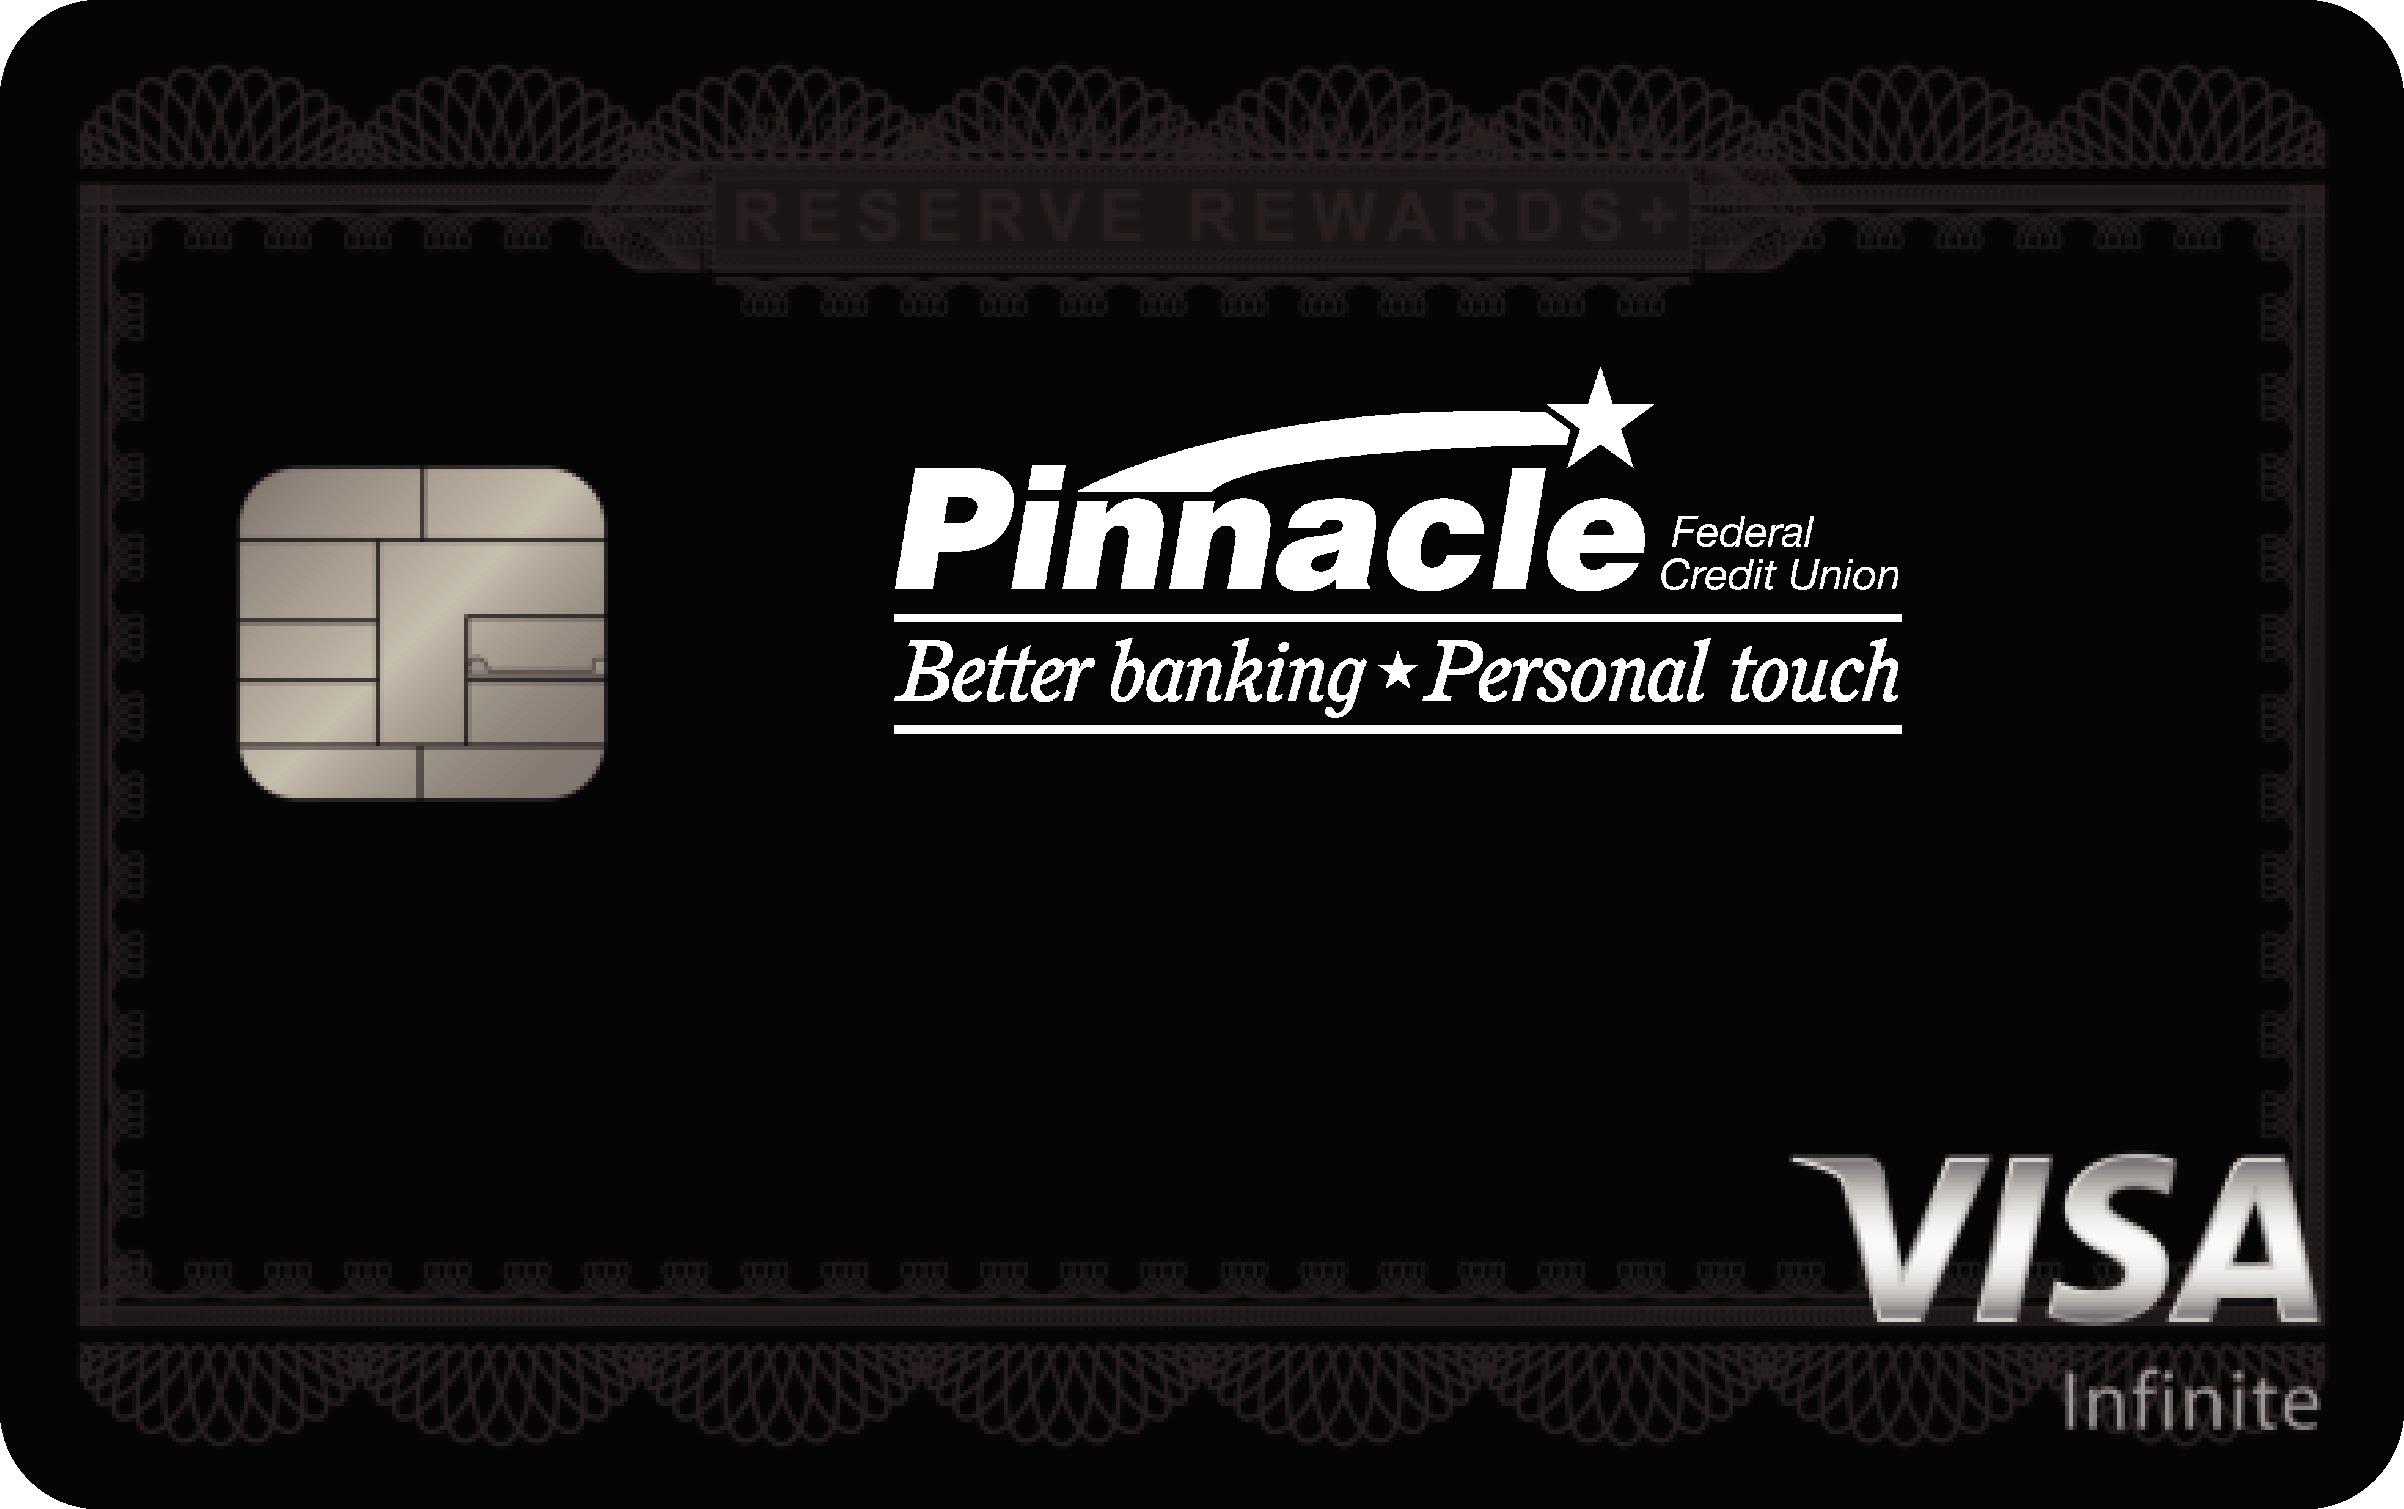 Pinnacle Federal Credit Union Reserve Rewards+ Card